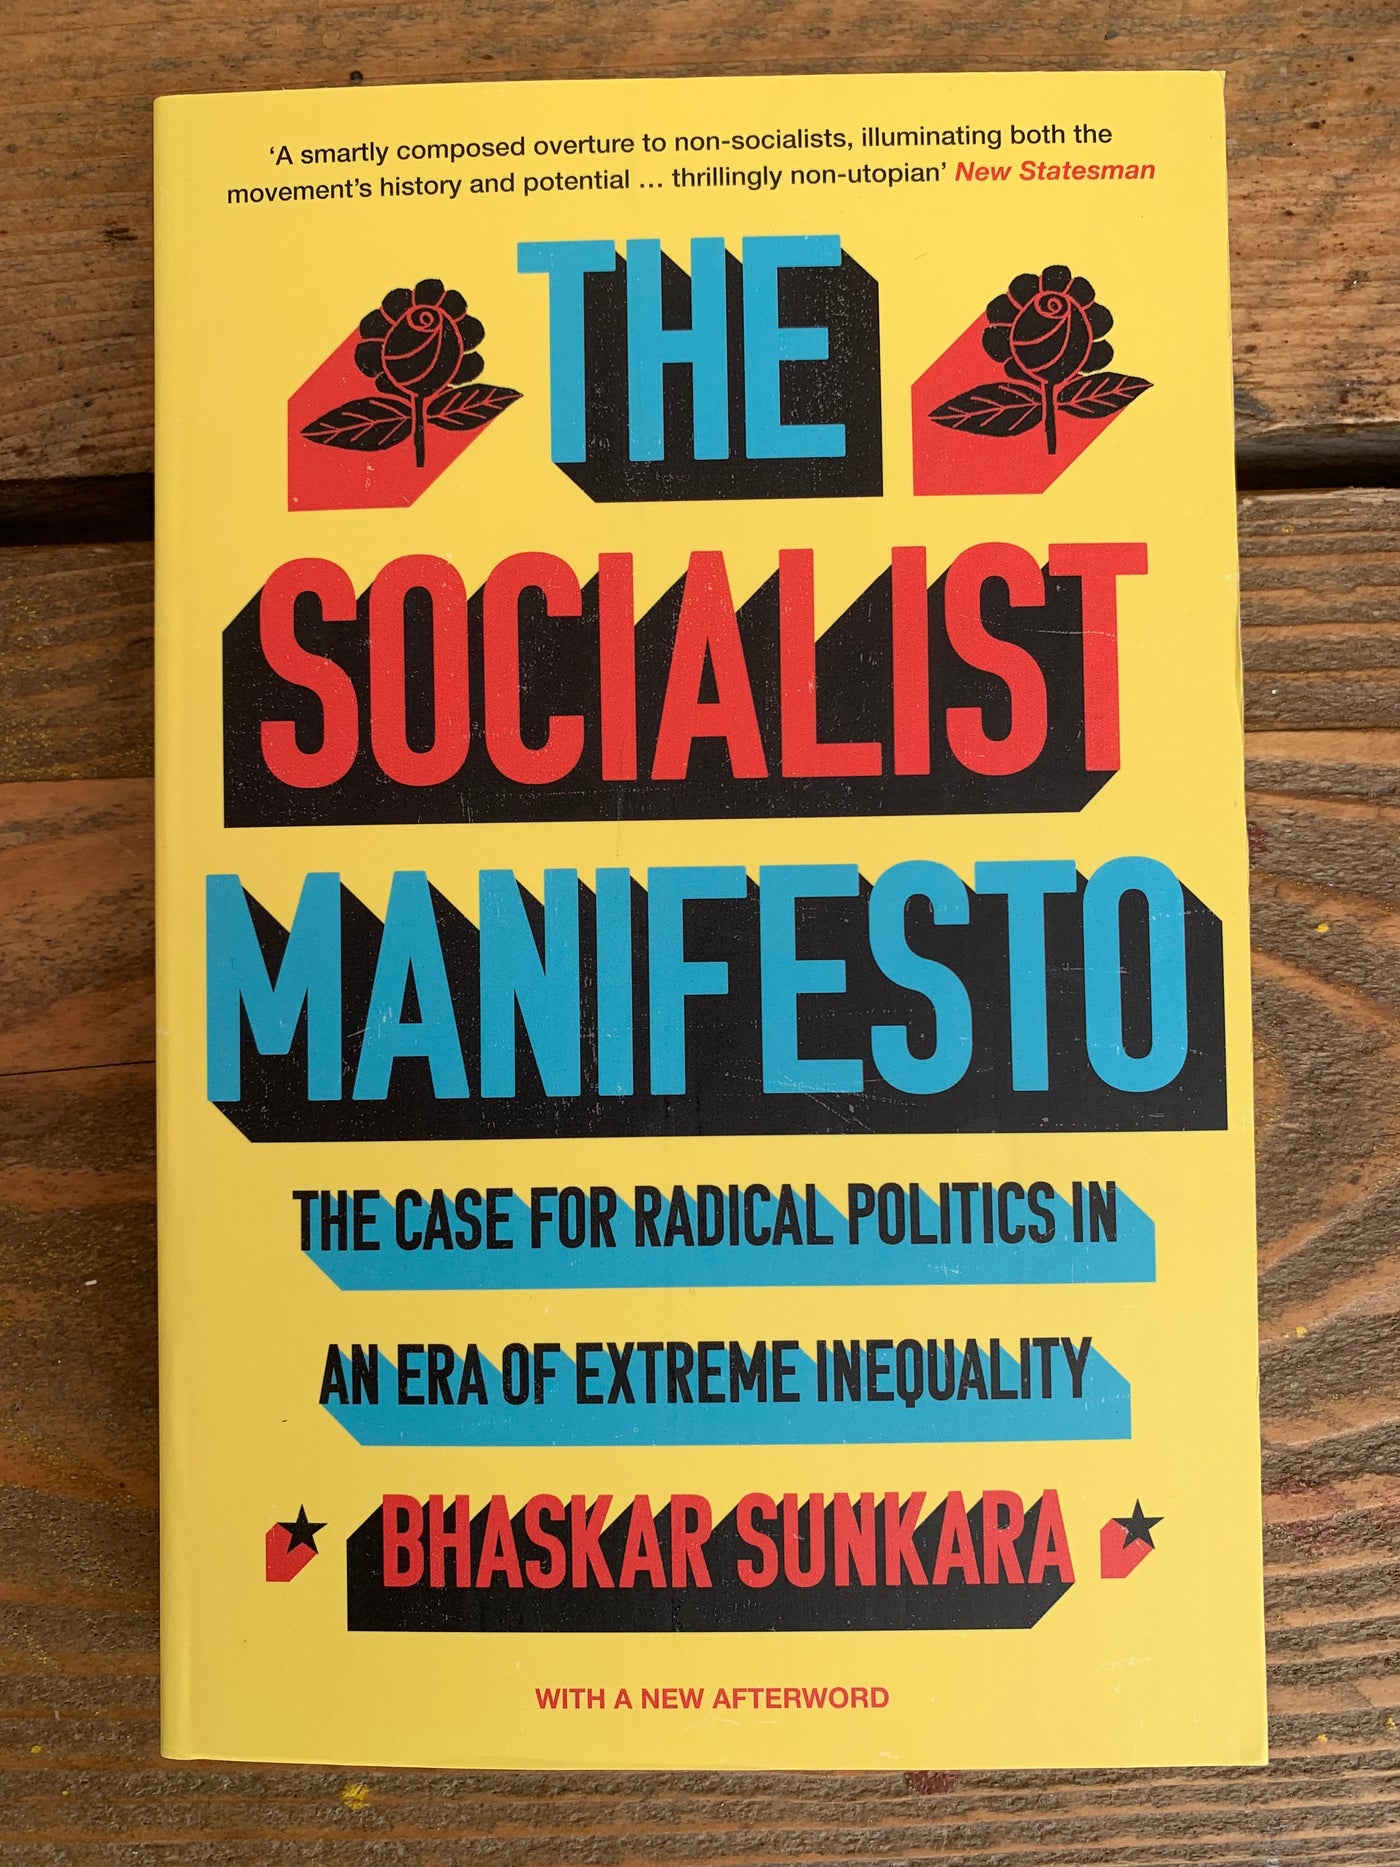 The Socialist Manifesto